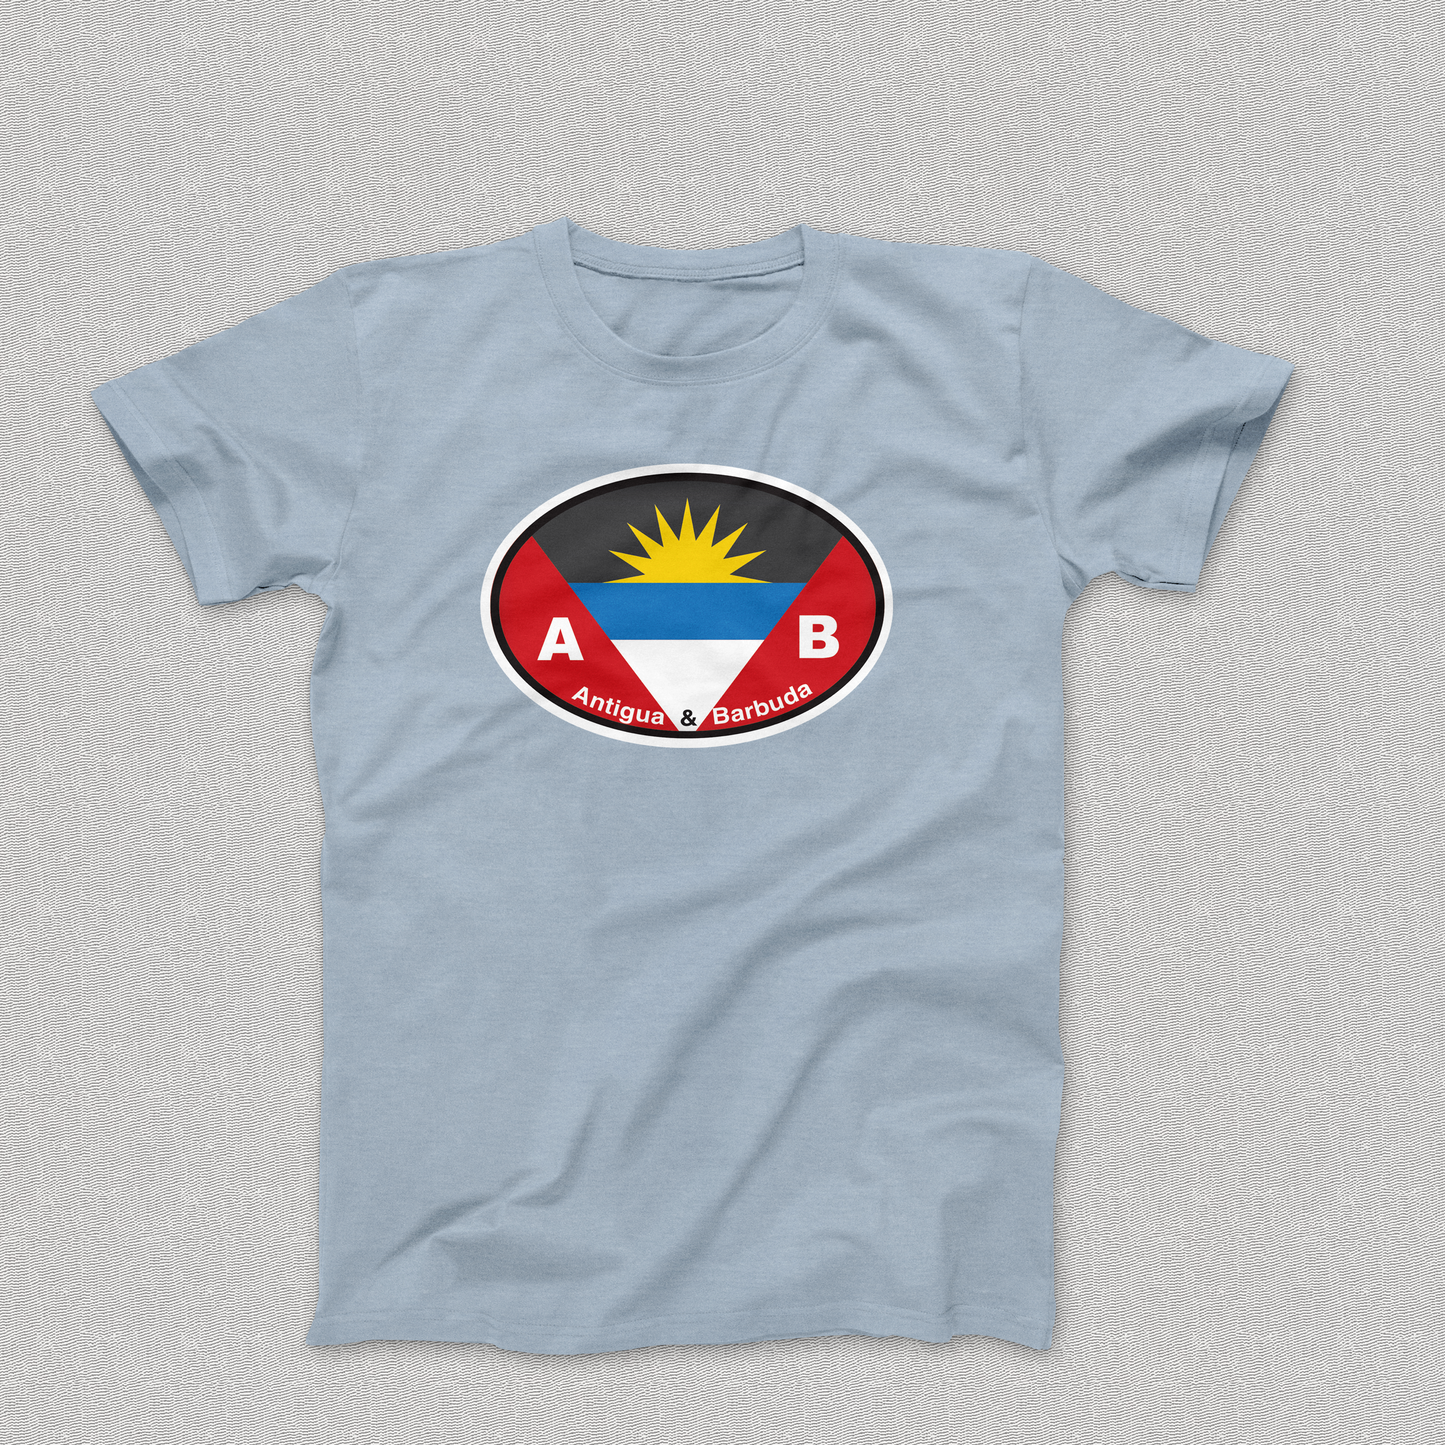 Antigua & Barbuda Souvenir T-Shirts - My Destination Location